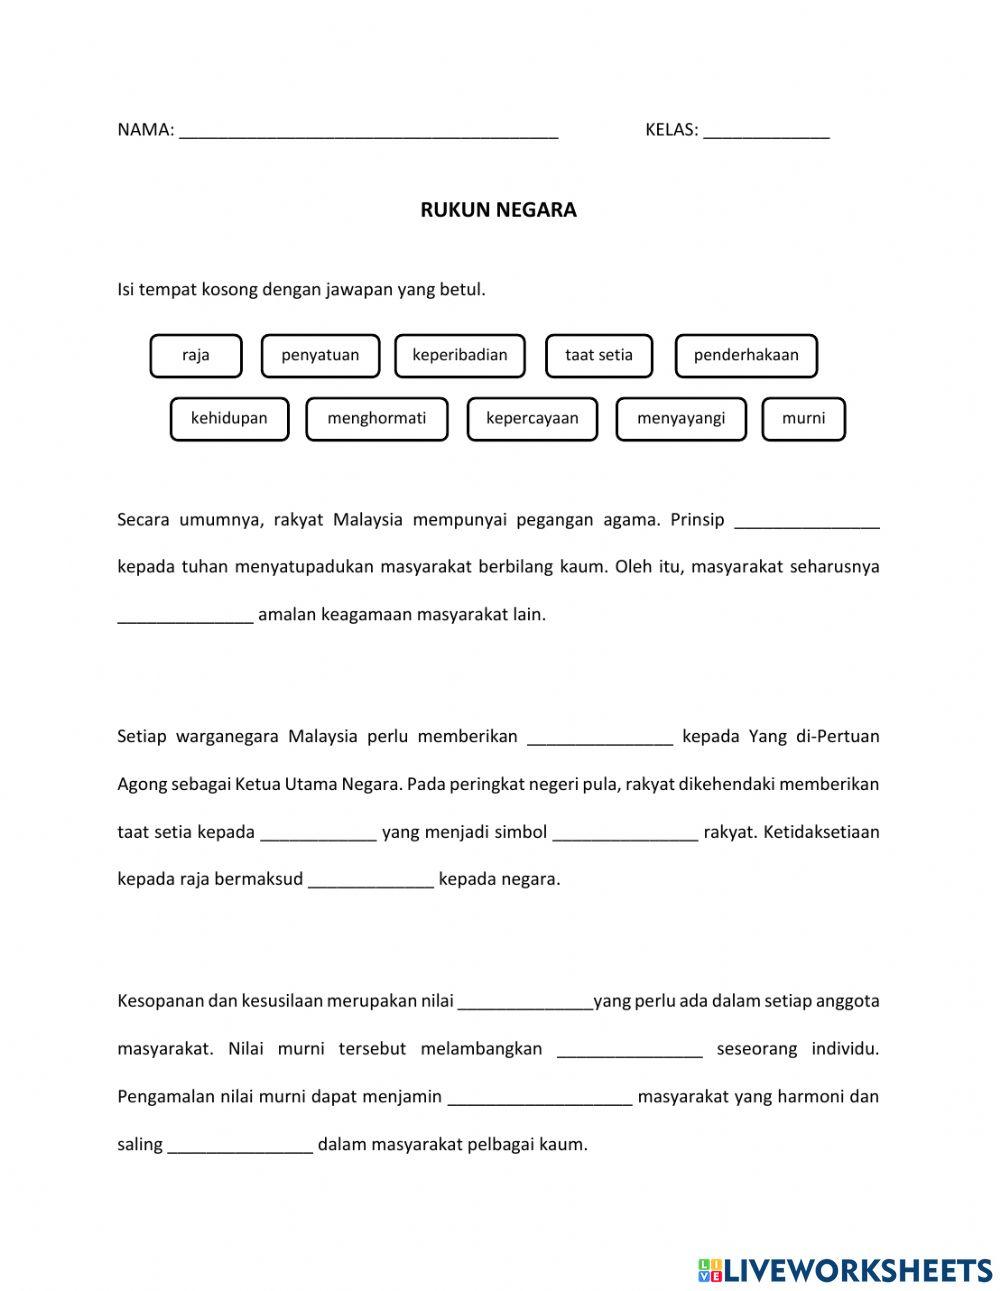 Rukun Negara interactive worksheet for 1-6